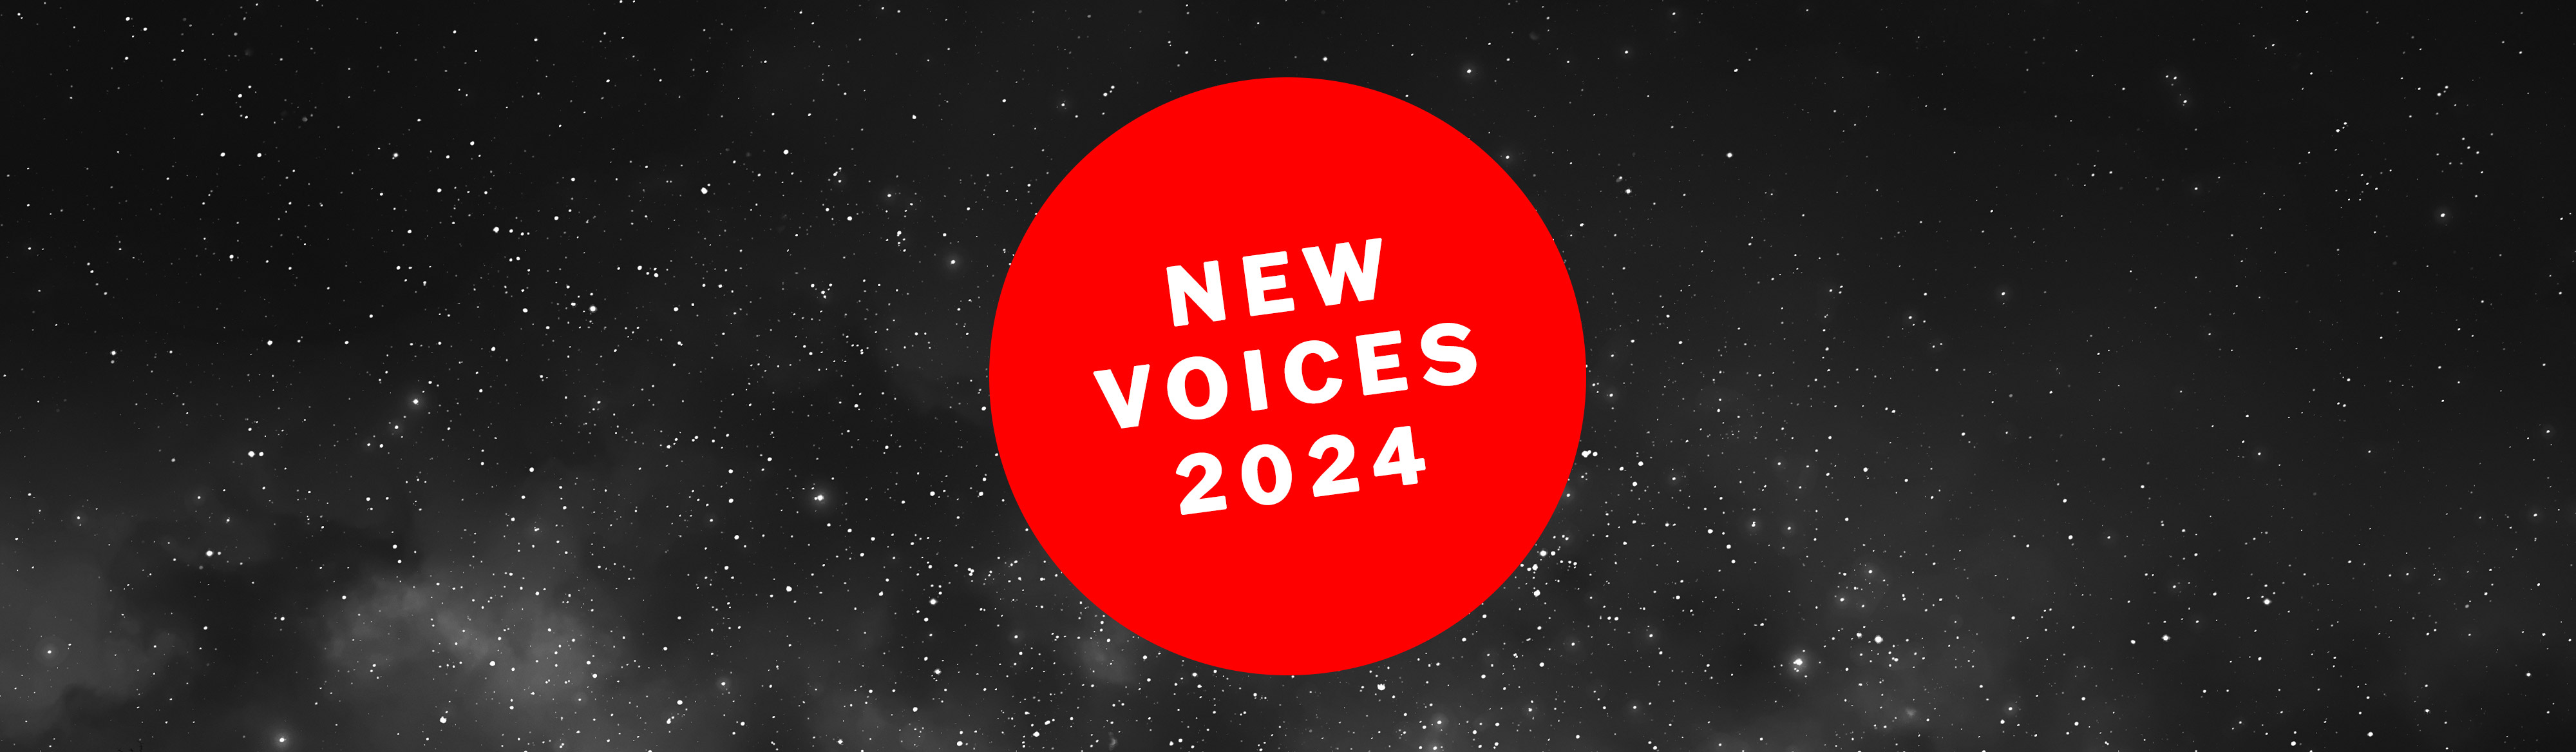 New Voices 2024